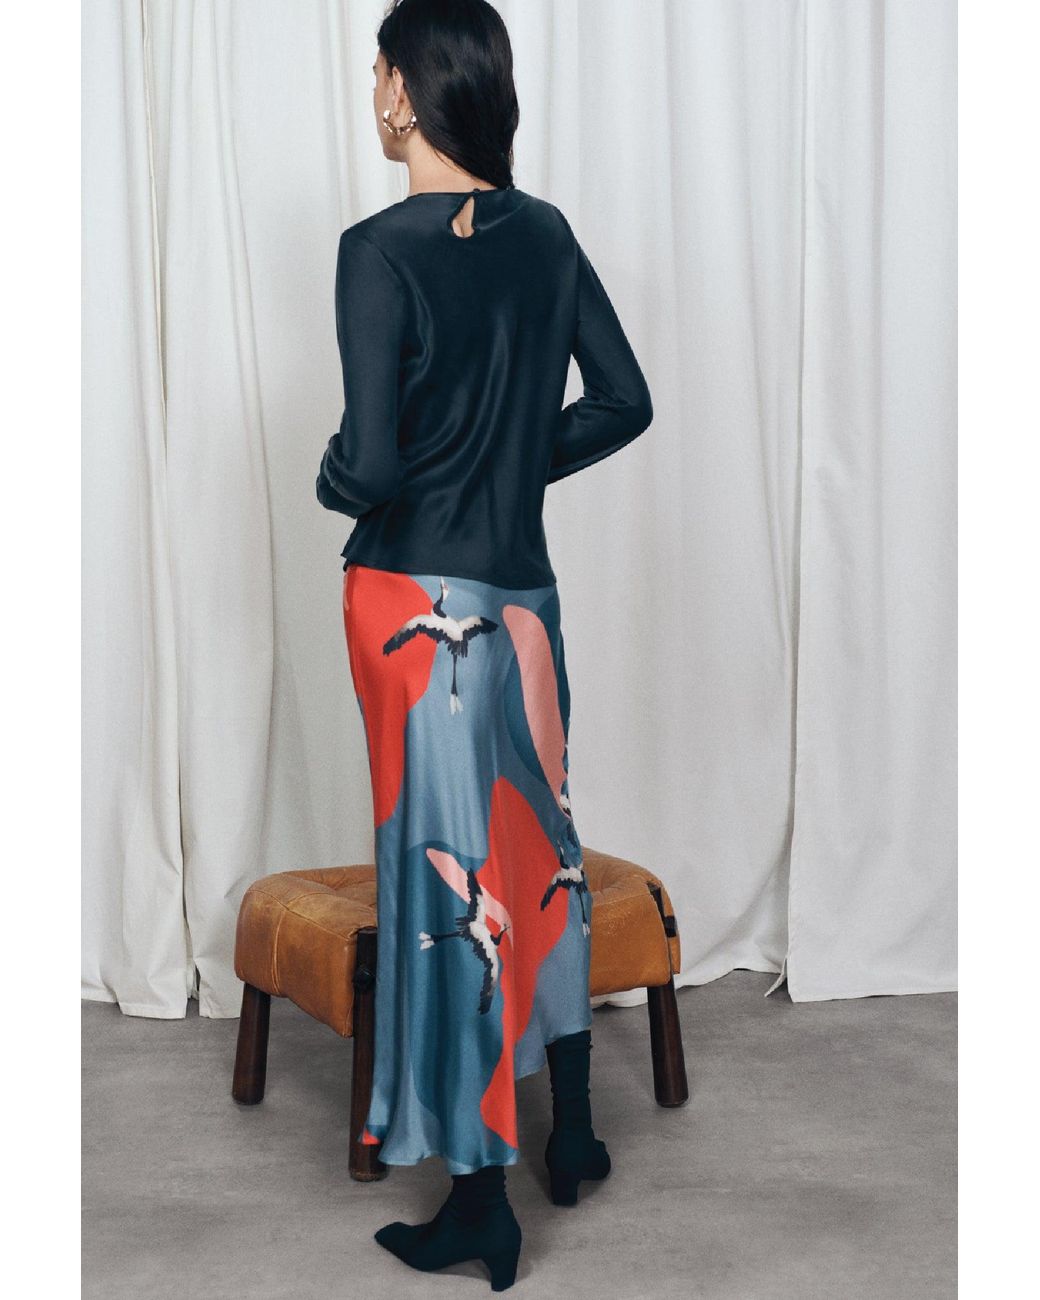 Shop The Slip Skirt in Black  Max Womens Fashion NZ